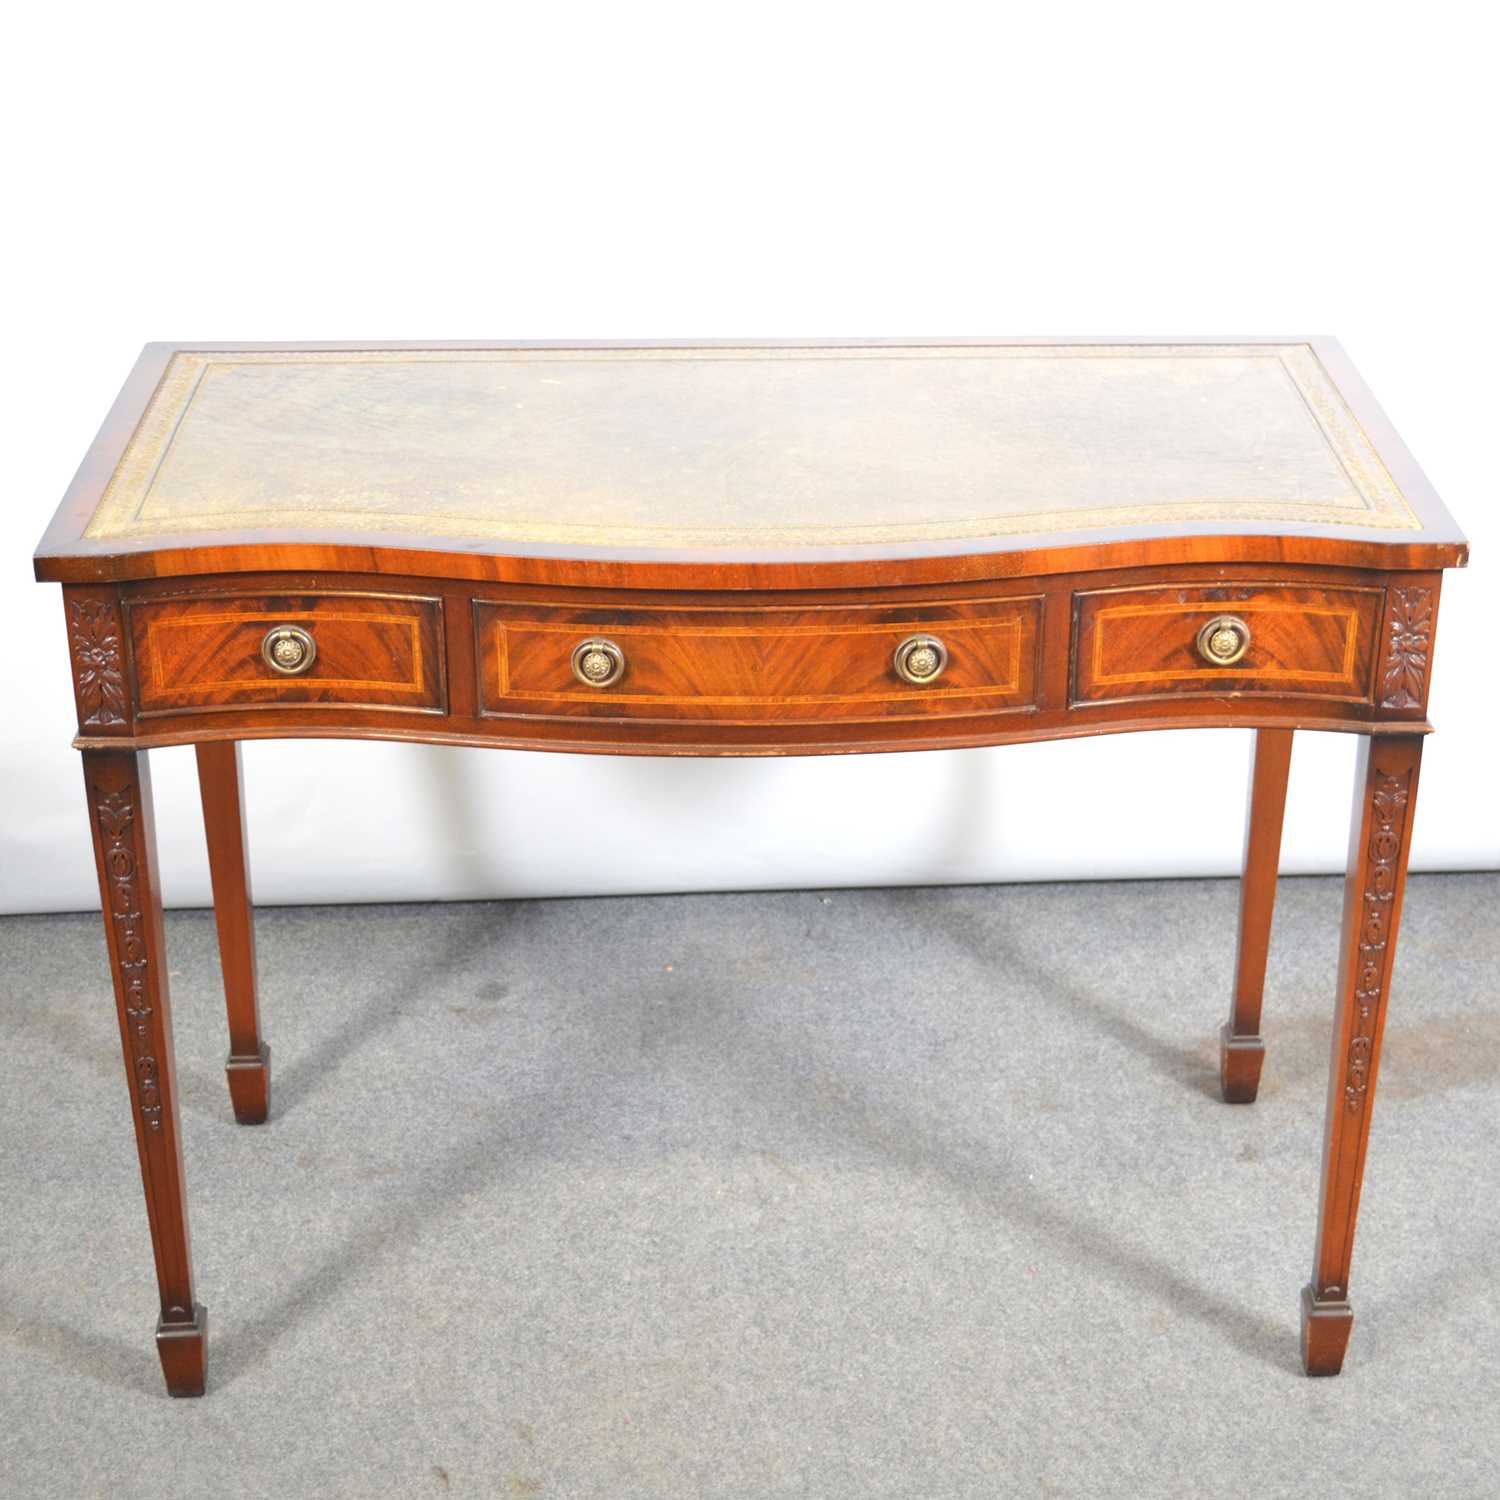 Lot 574 - Reproduction mahogany desk